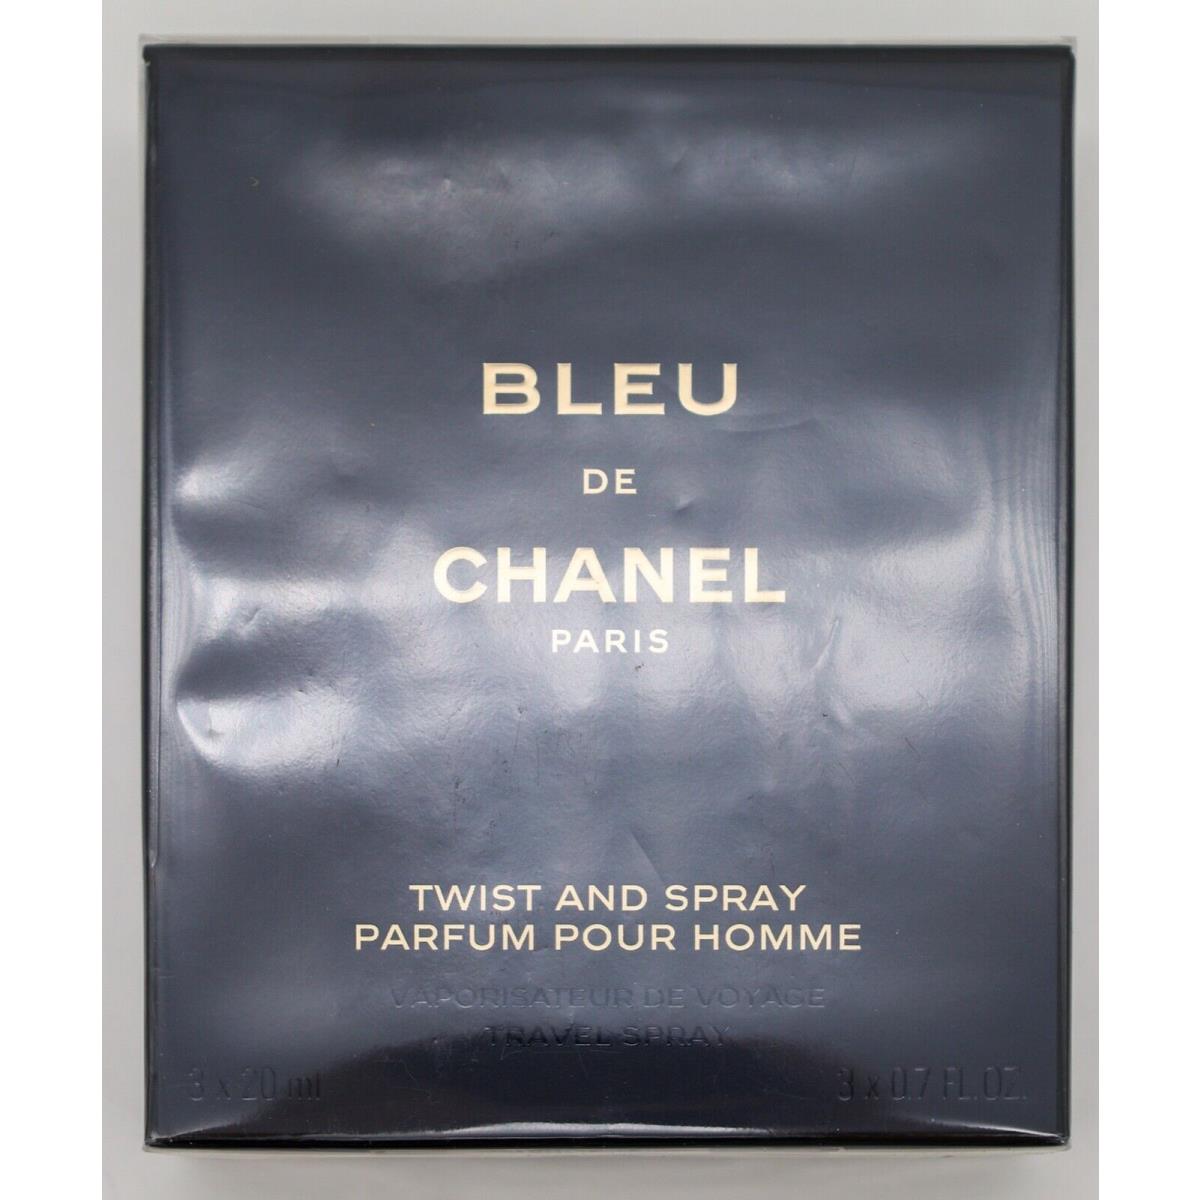 Chanel Bleu De Chanel Parfum 3 x 20ml Ships Fast From Finescents